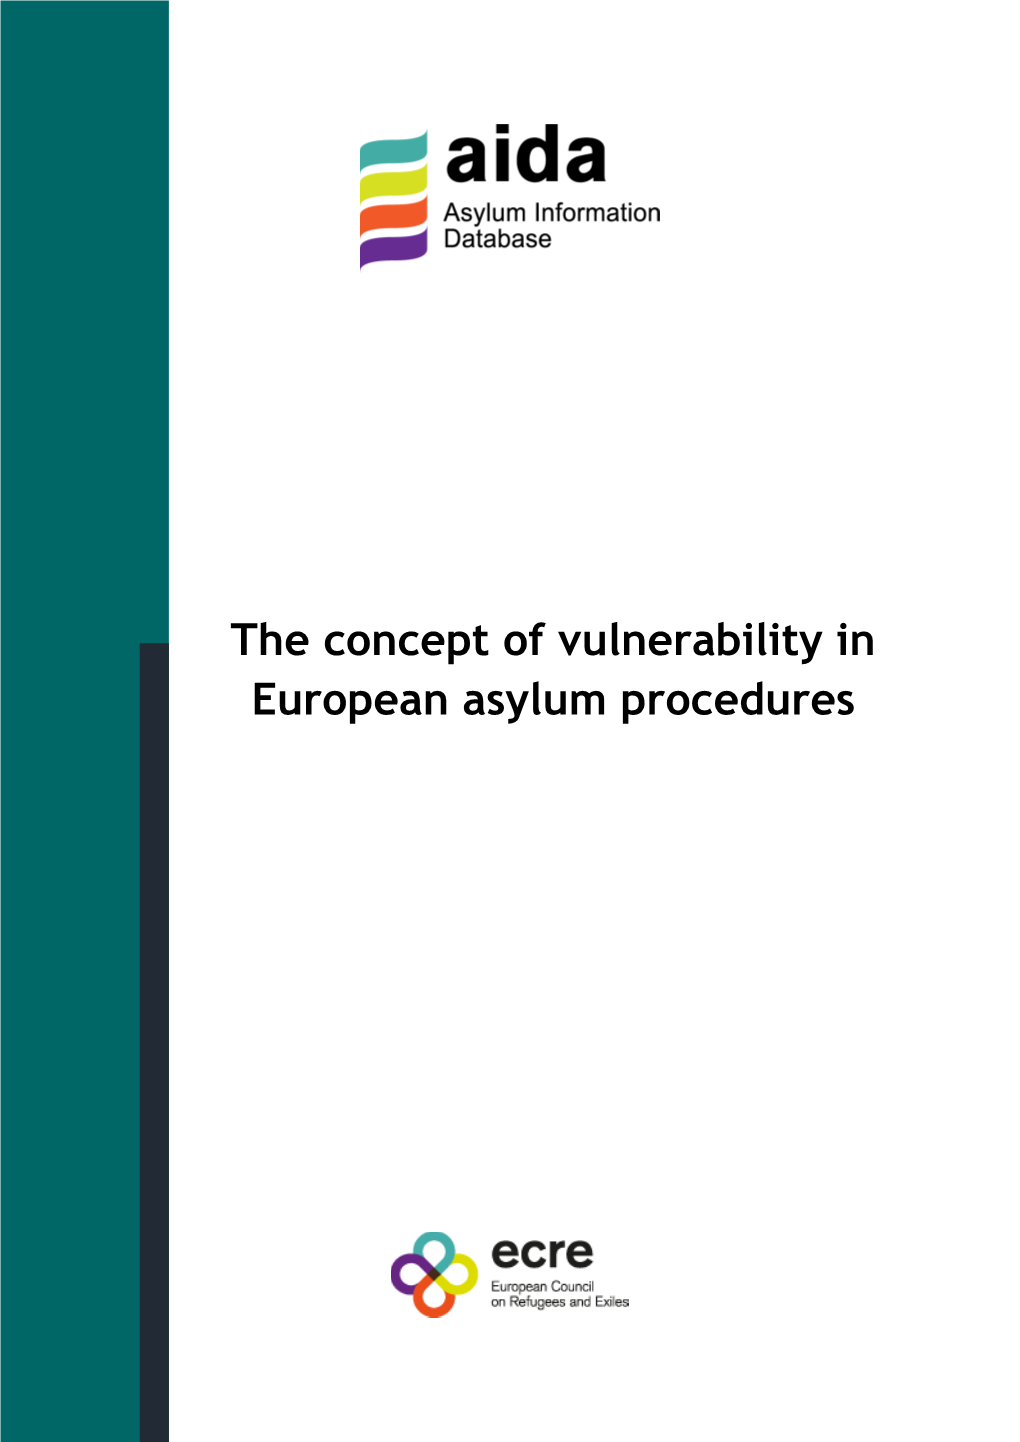 The Concept of Vulnerability in European Asylum Procedures